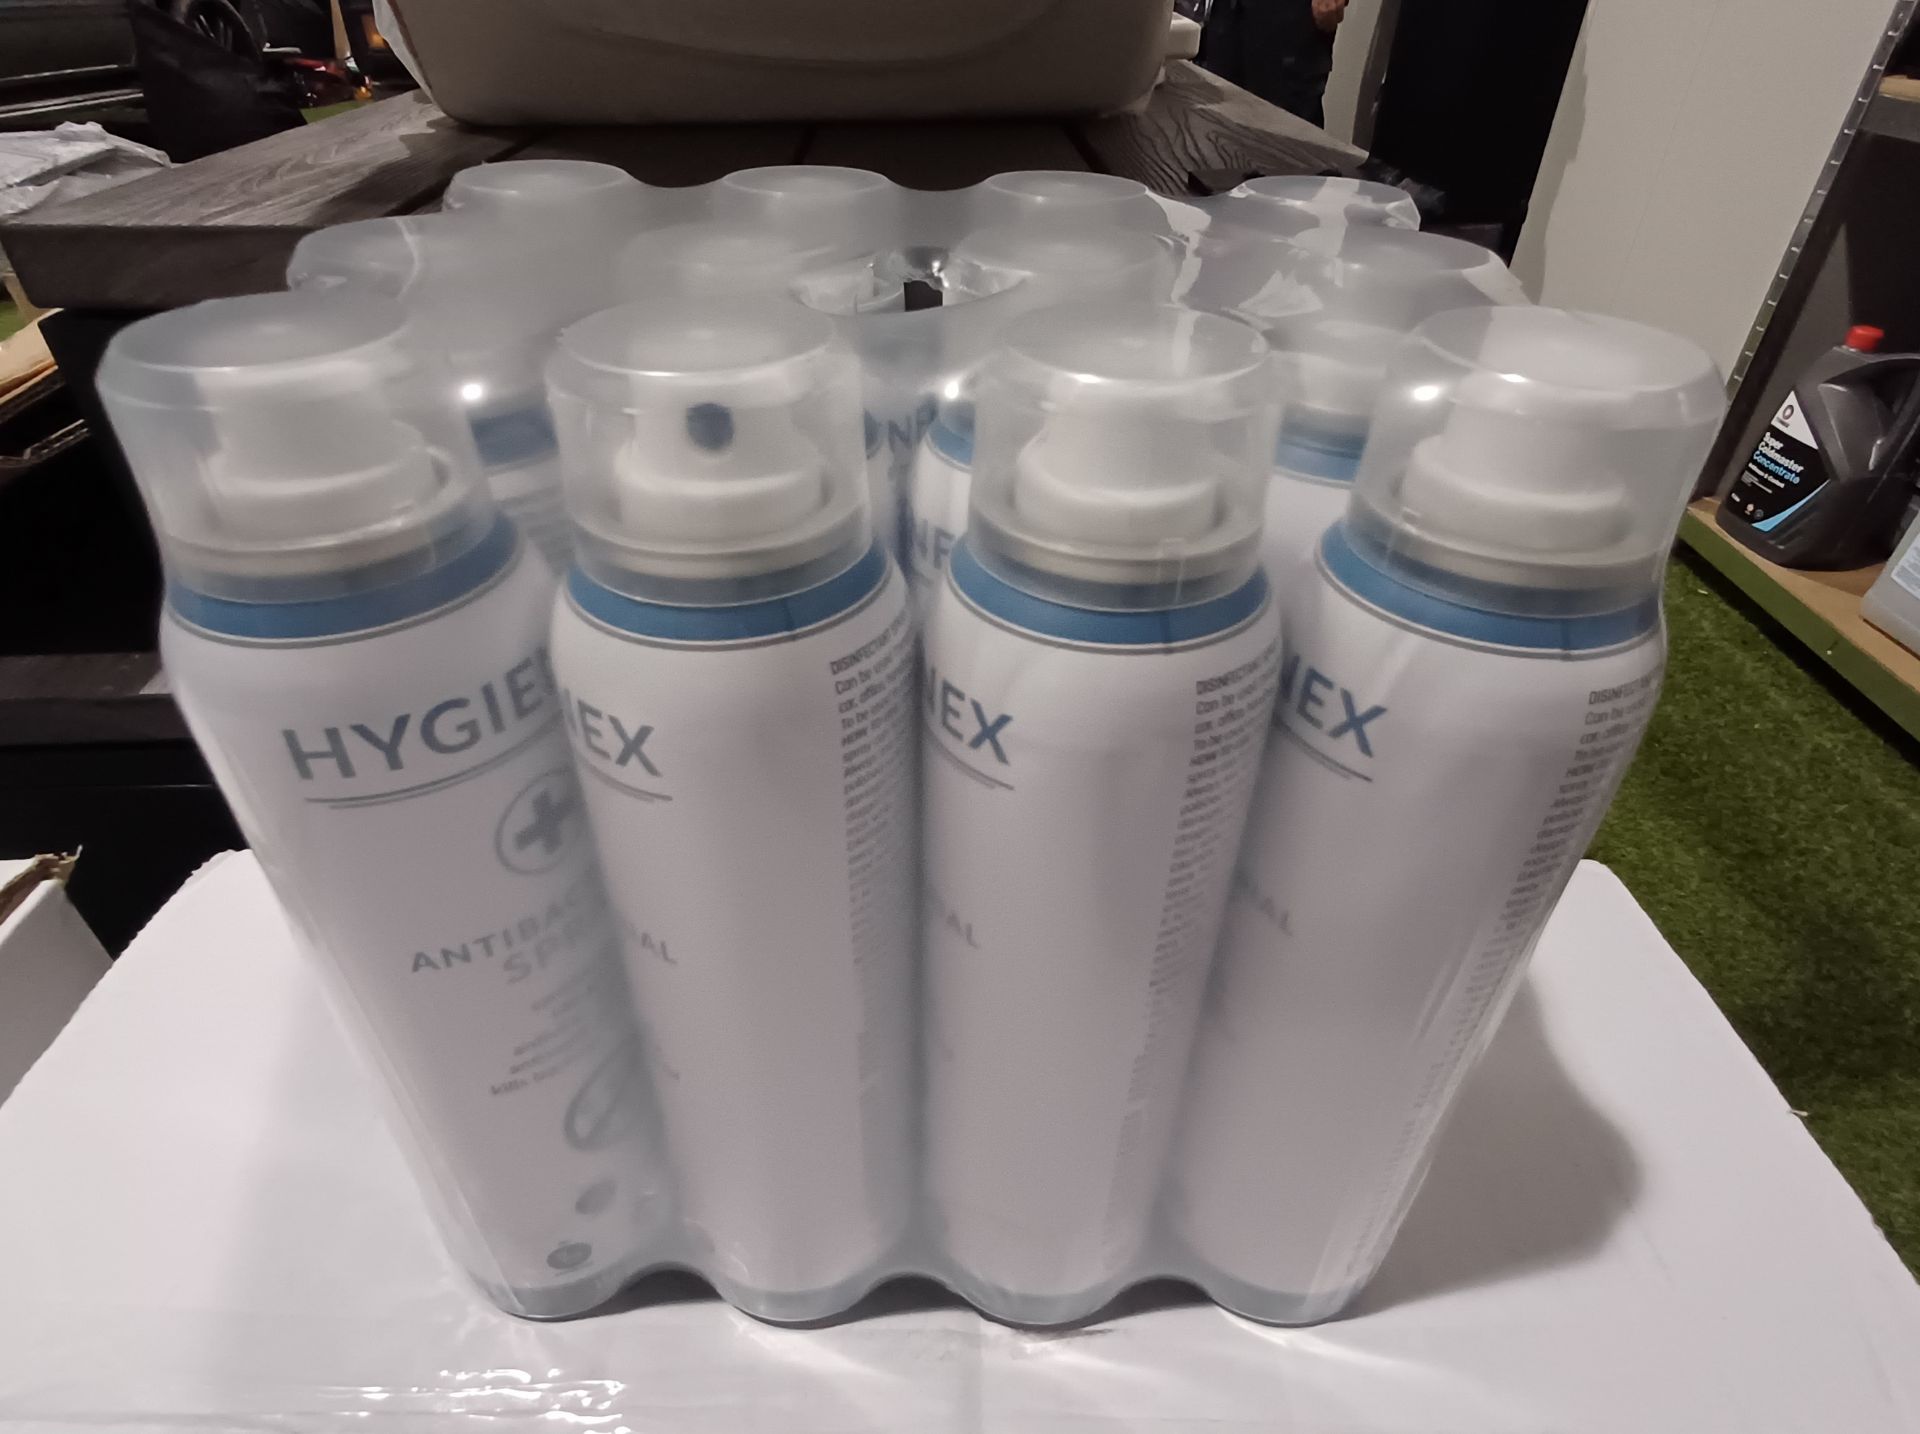 4 Boxes of Hygienex antibacterial spray